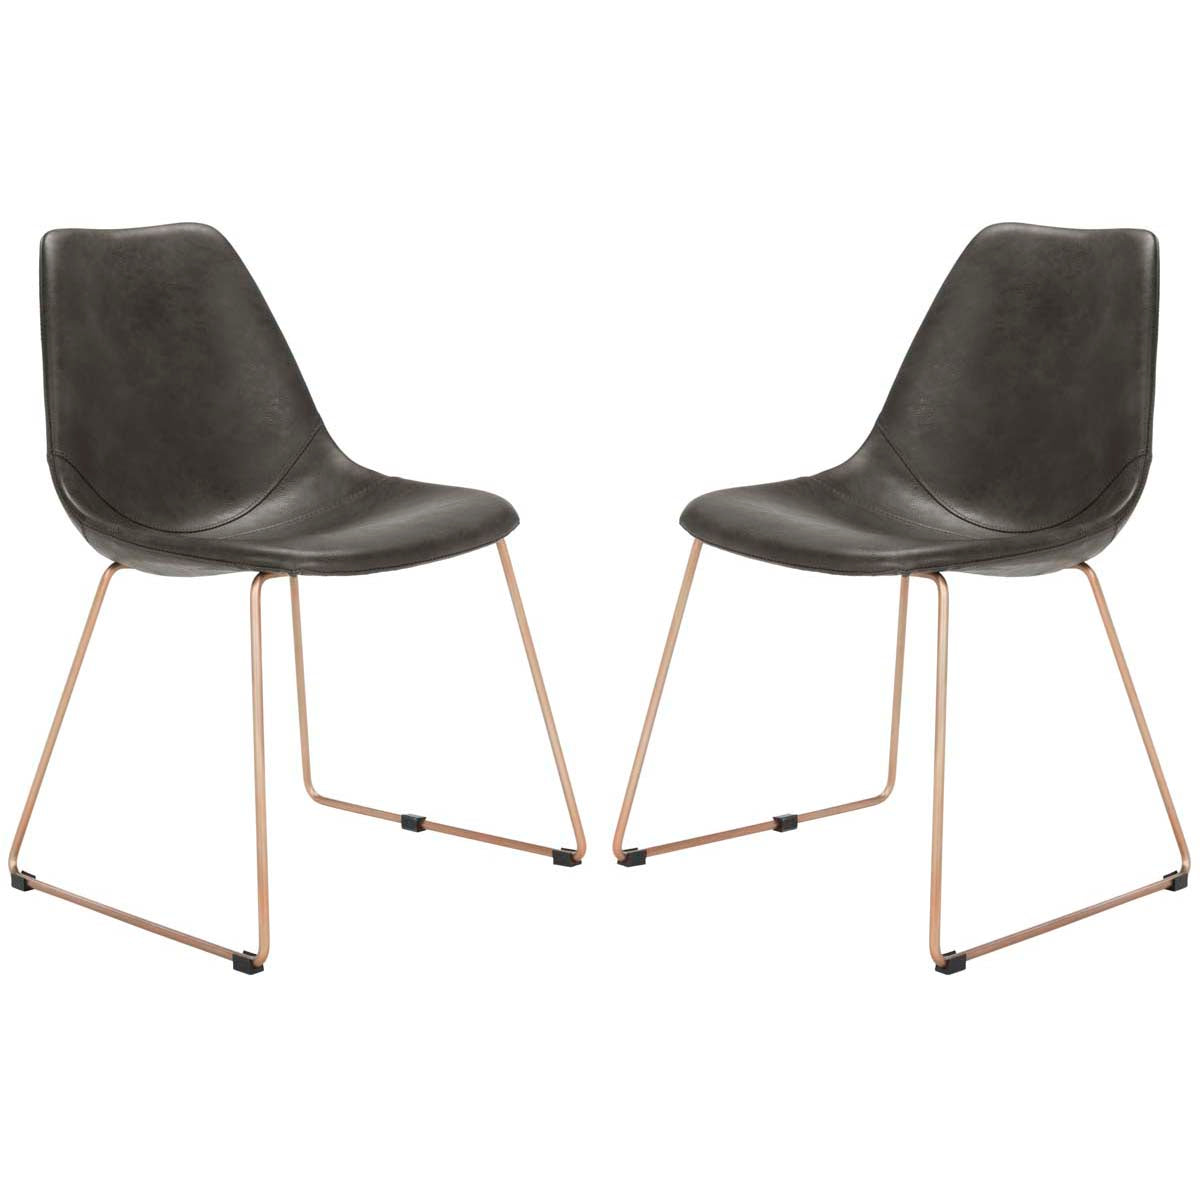 Safavieh Dorian Midcentury Modern Leather Dining Chair, ACH7003 - Grey/Copper (Set of 2)